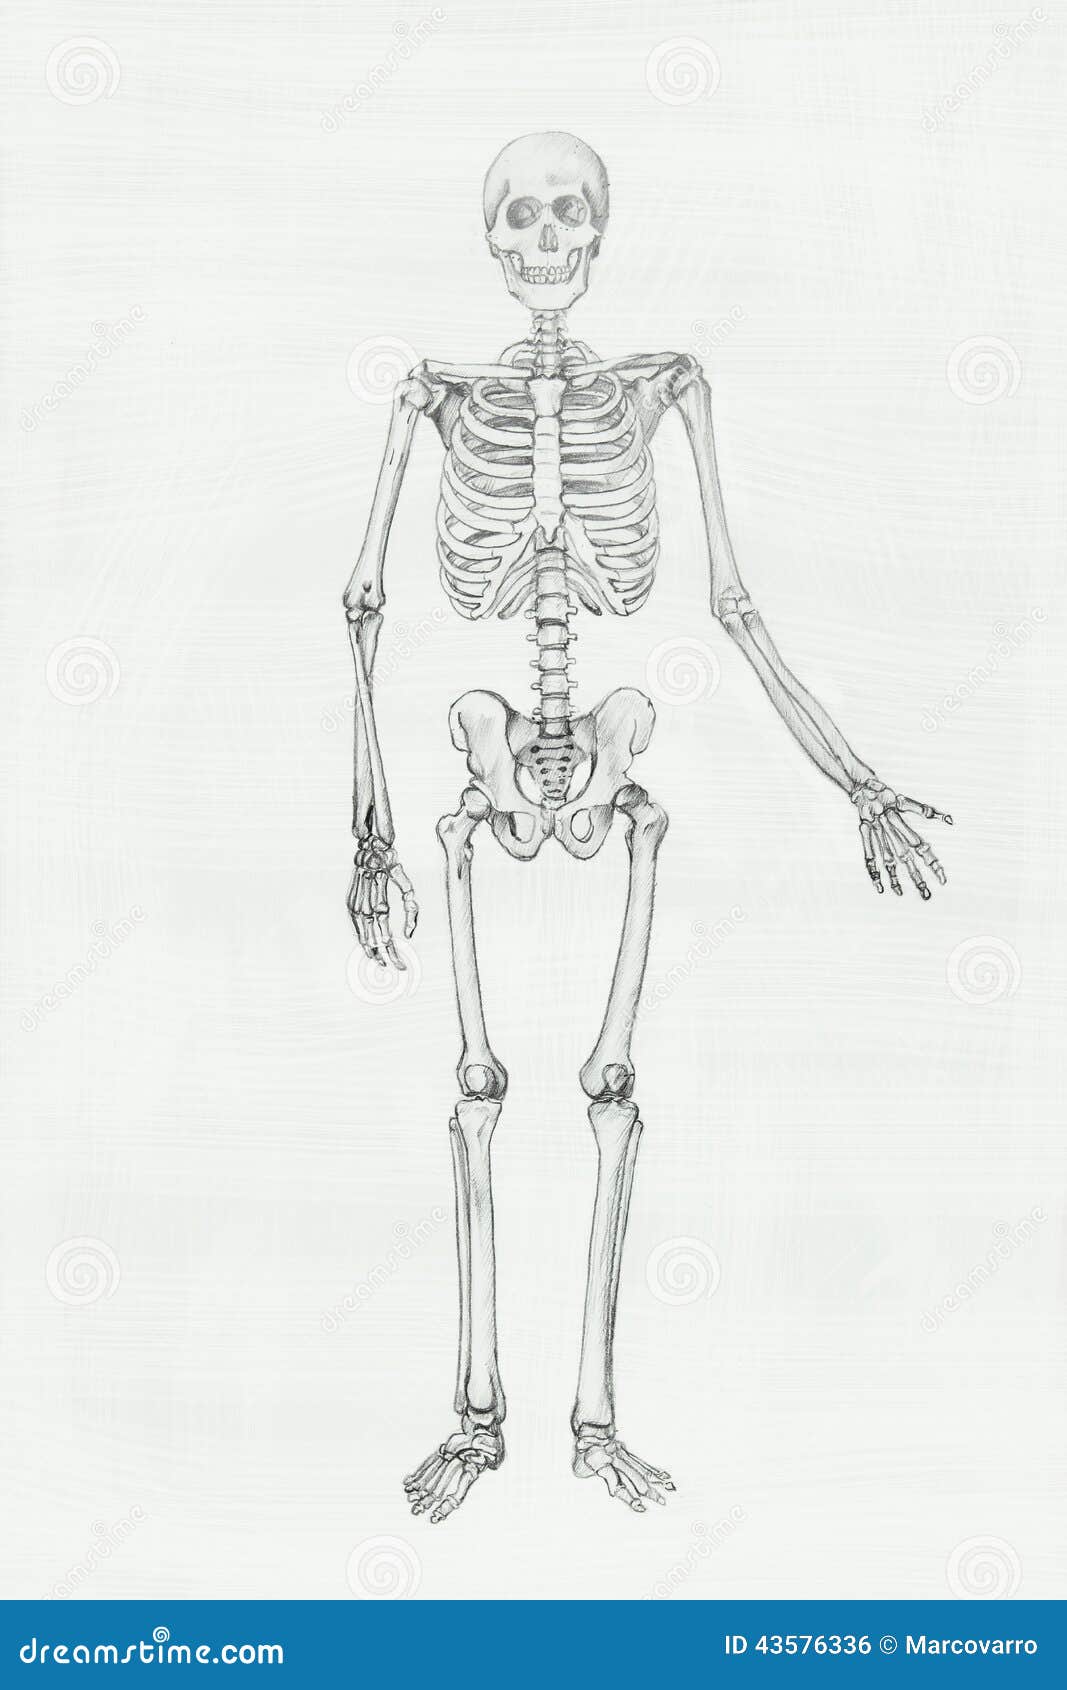 Drawing Human Skeleton Serif Pencil On Stock Illustration 1357308425   Shutterstock